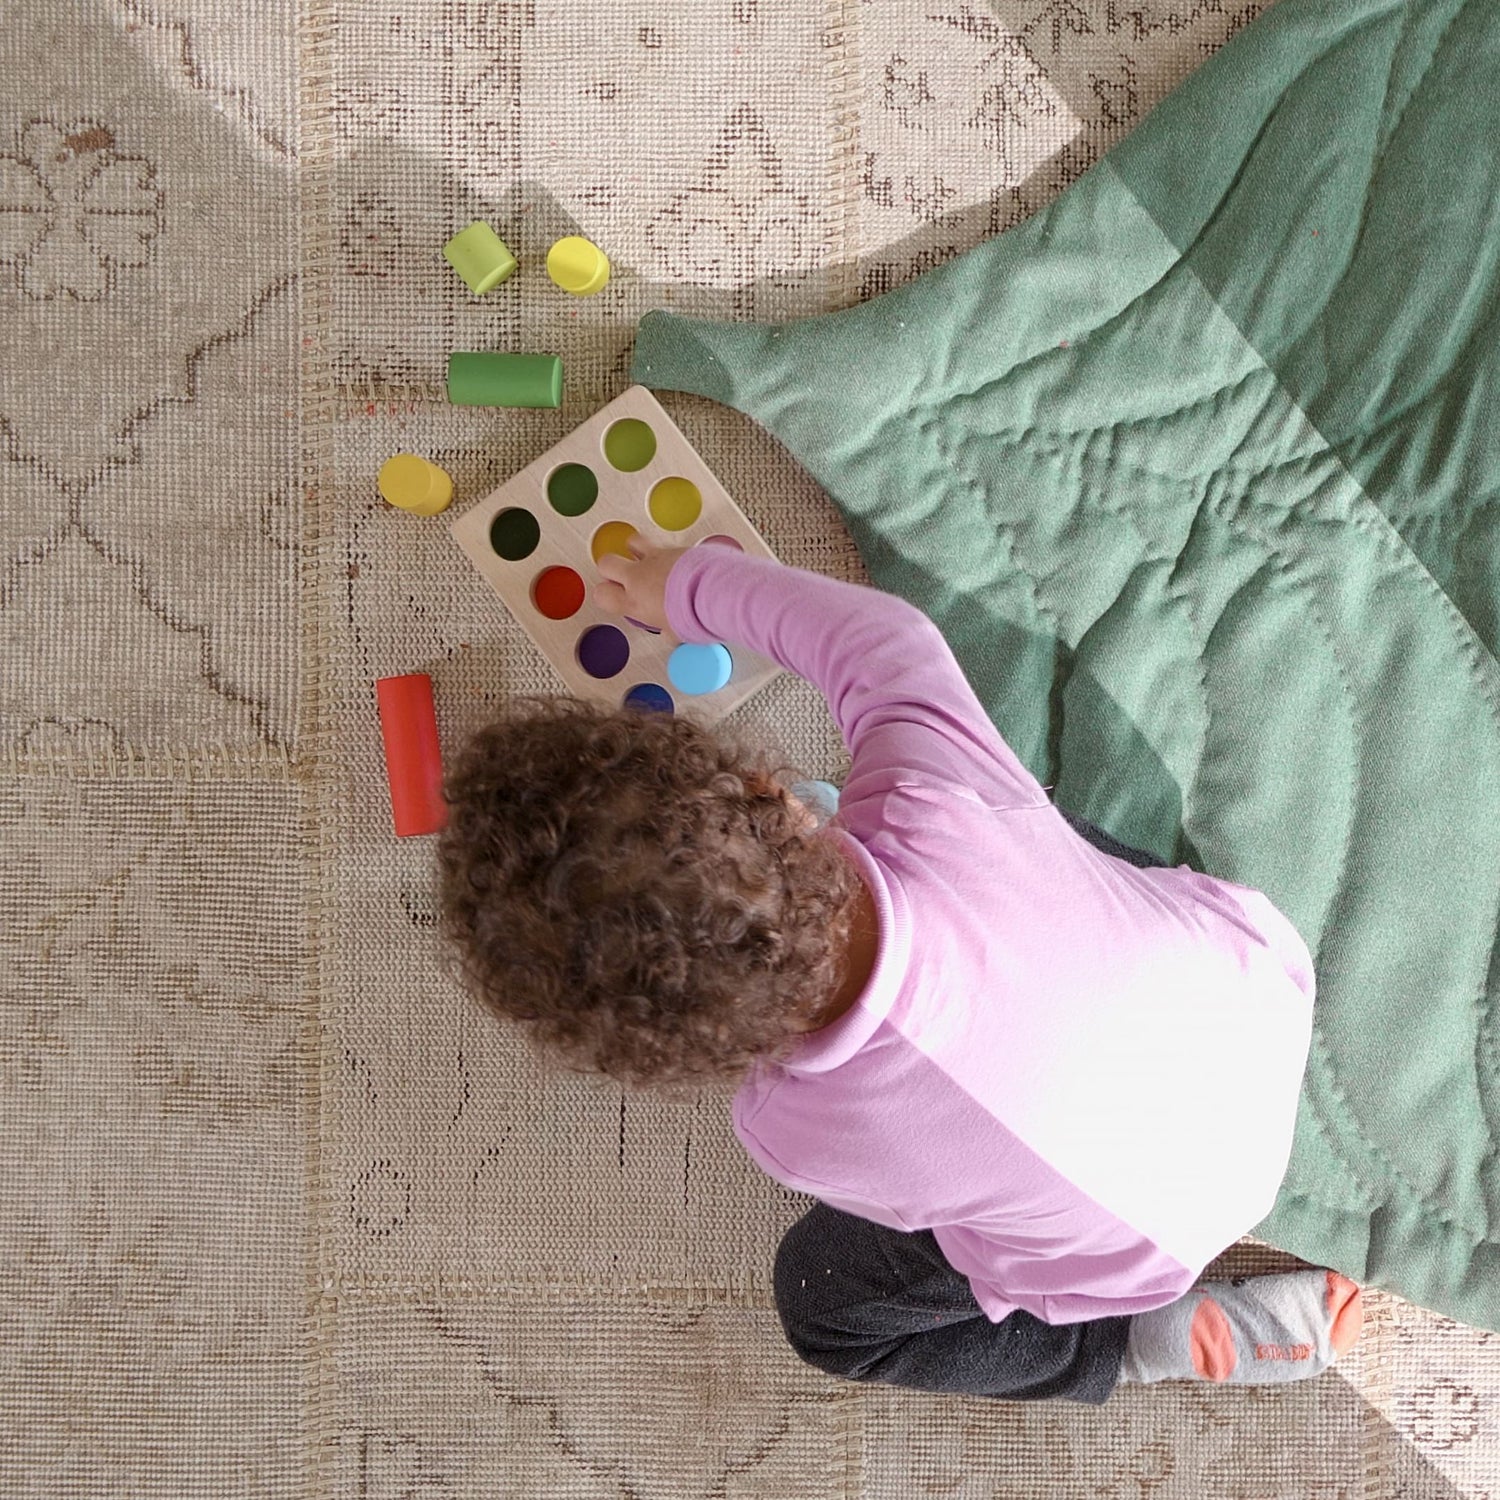 Montessori Ahşap Renkler Eşleştirme Oyunu moritoys 